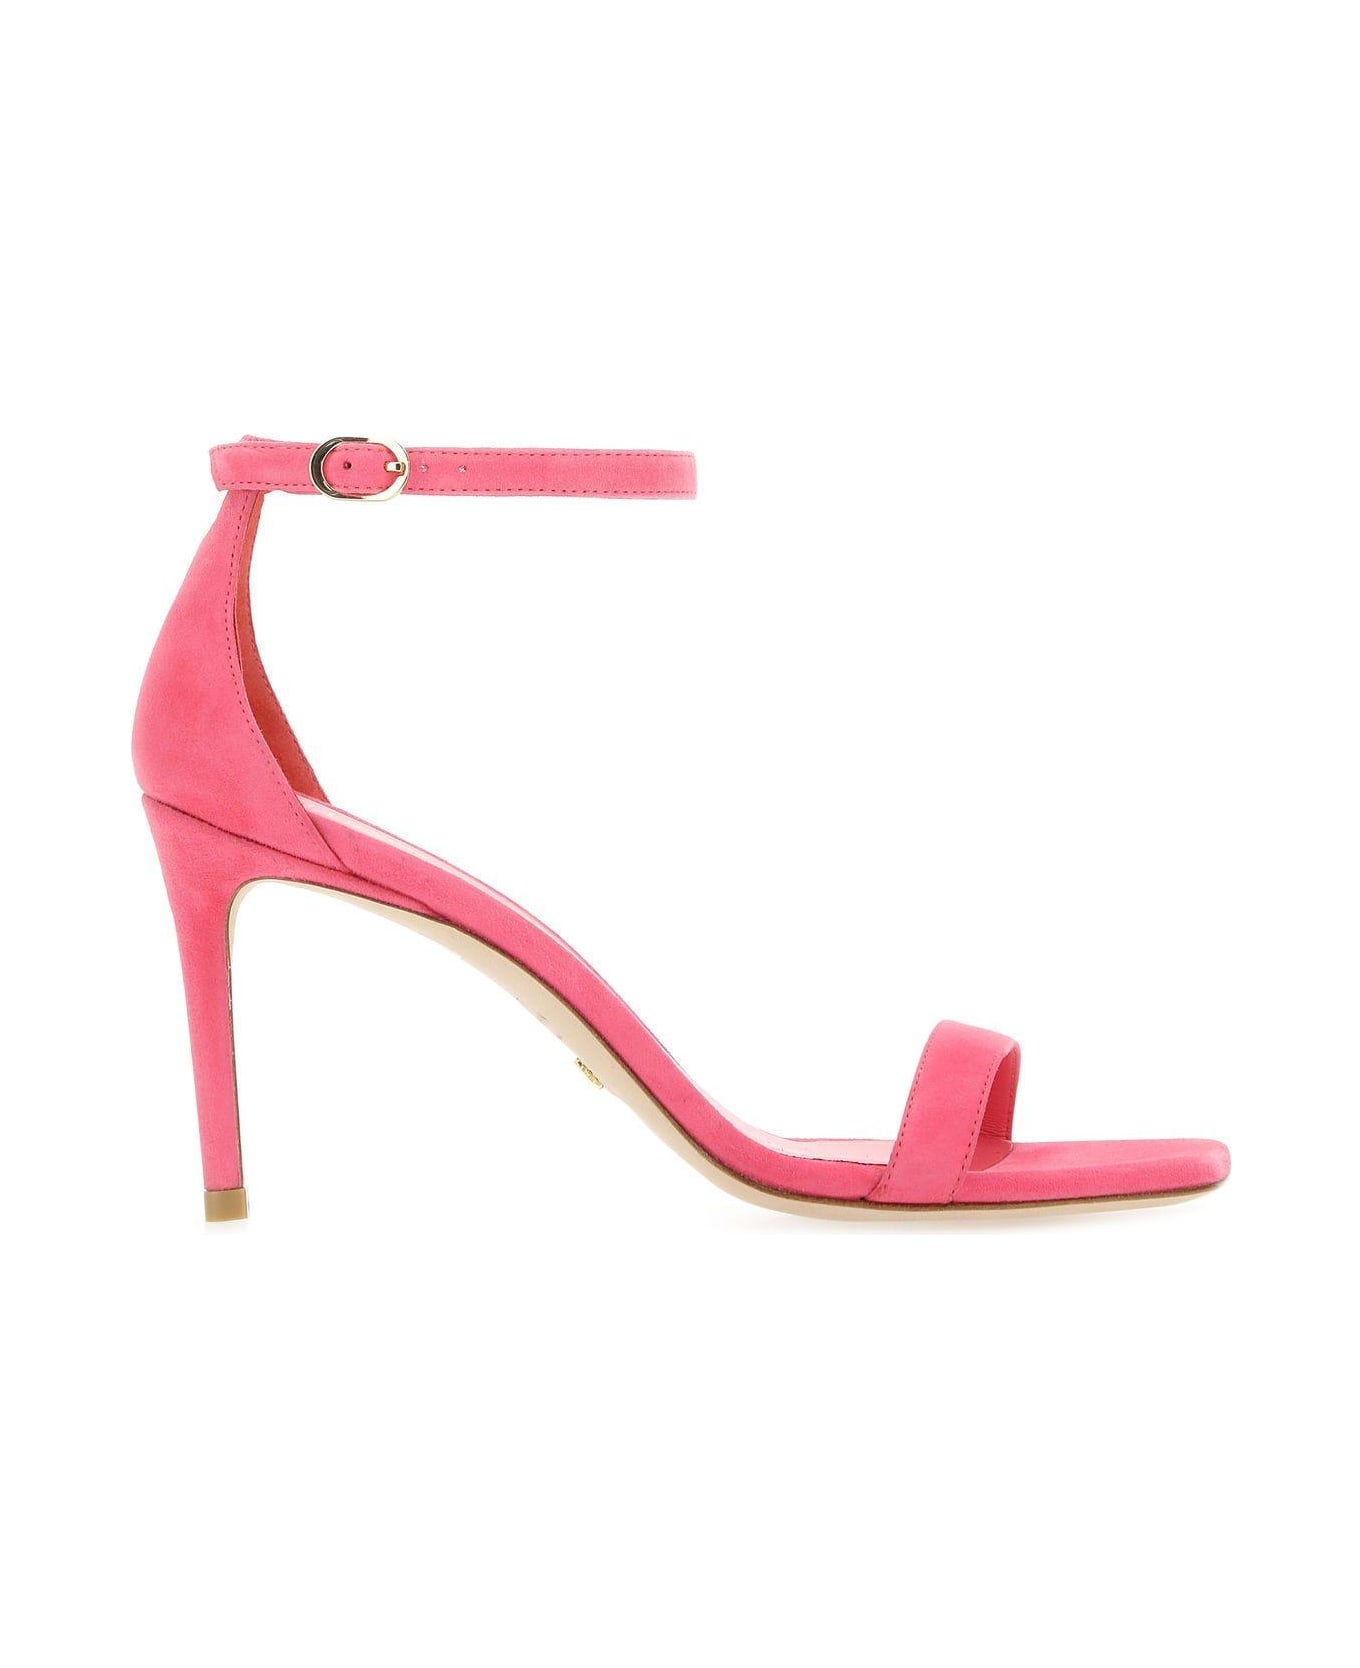 Stuart Weitzman Pink Suede Nunakedcurve 85 Sandals - Hot Pink